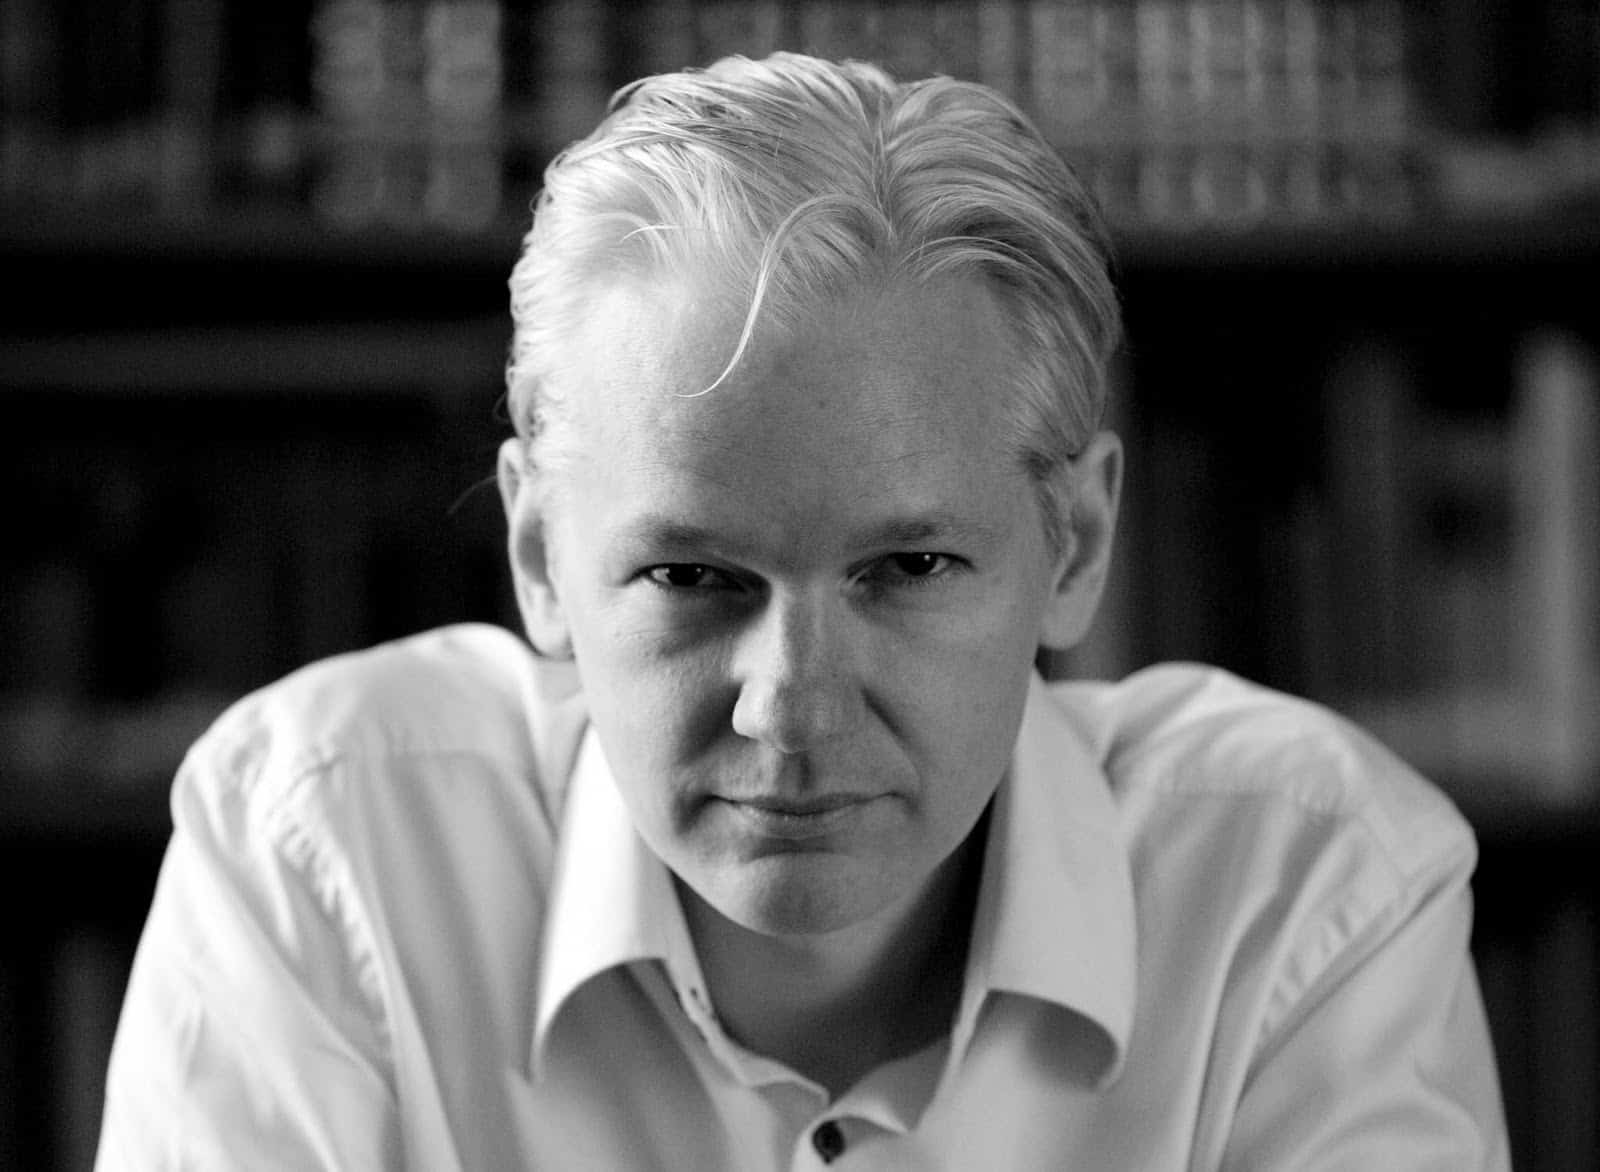 Julian Assange (creador de Wikileaks) ha sido detenido arbitrariamente, según informe de la ONU